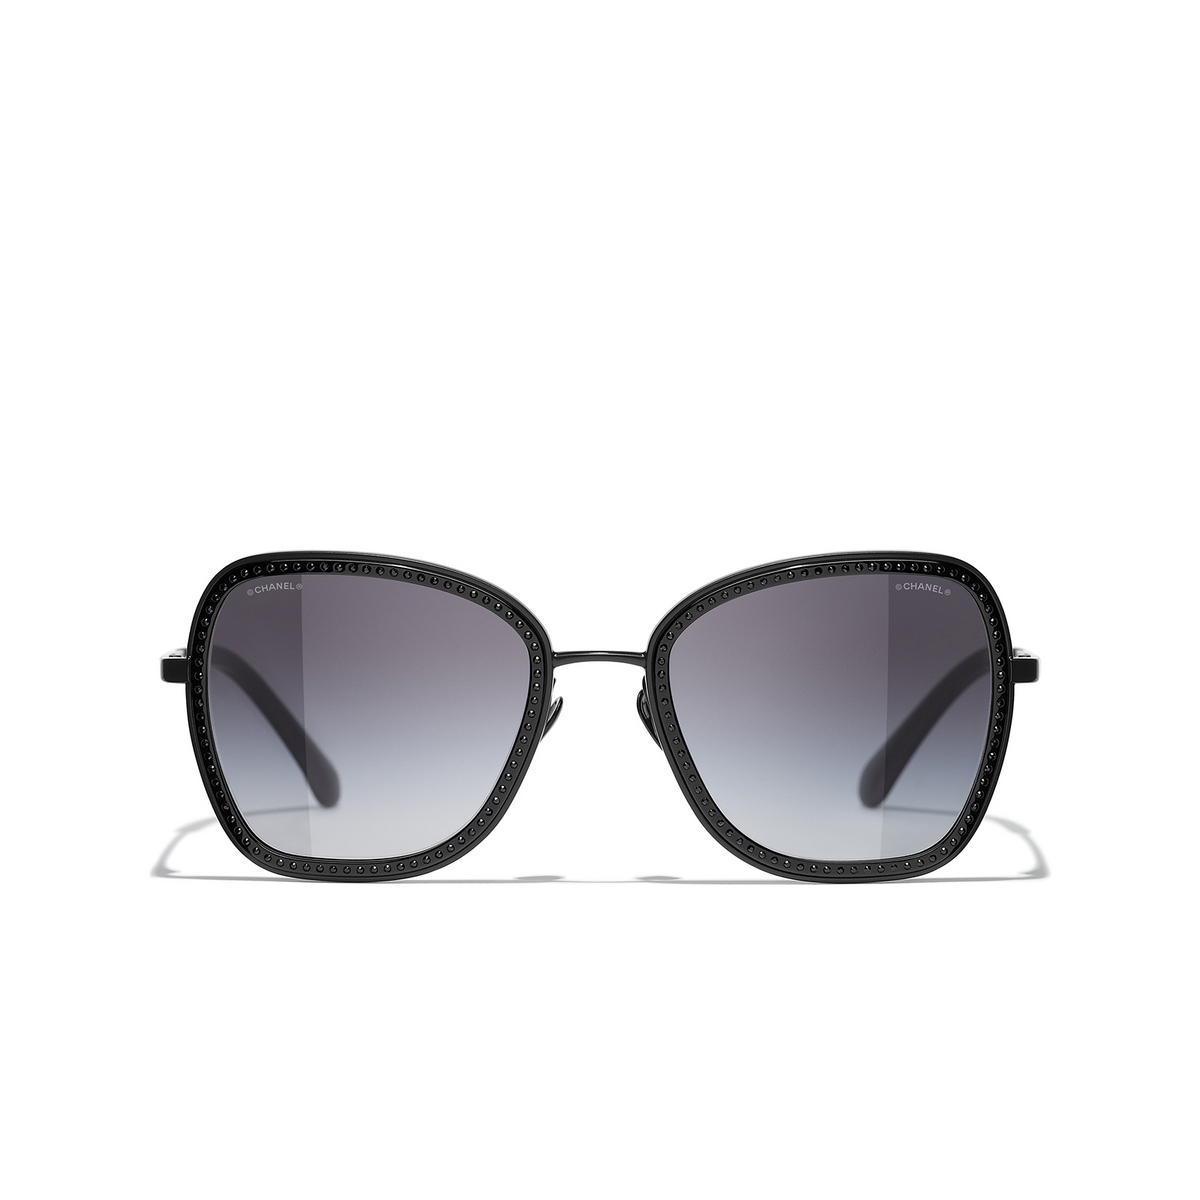 CHANEL square Sunglasses C101S6 Matte Black - front view